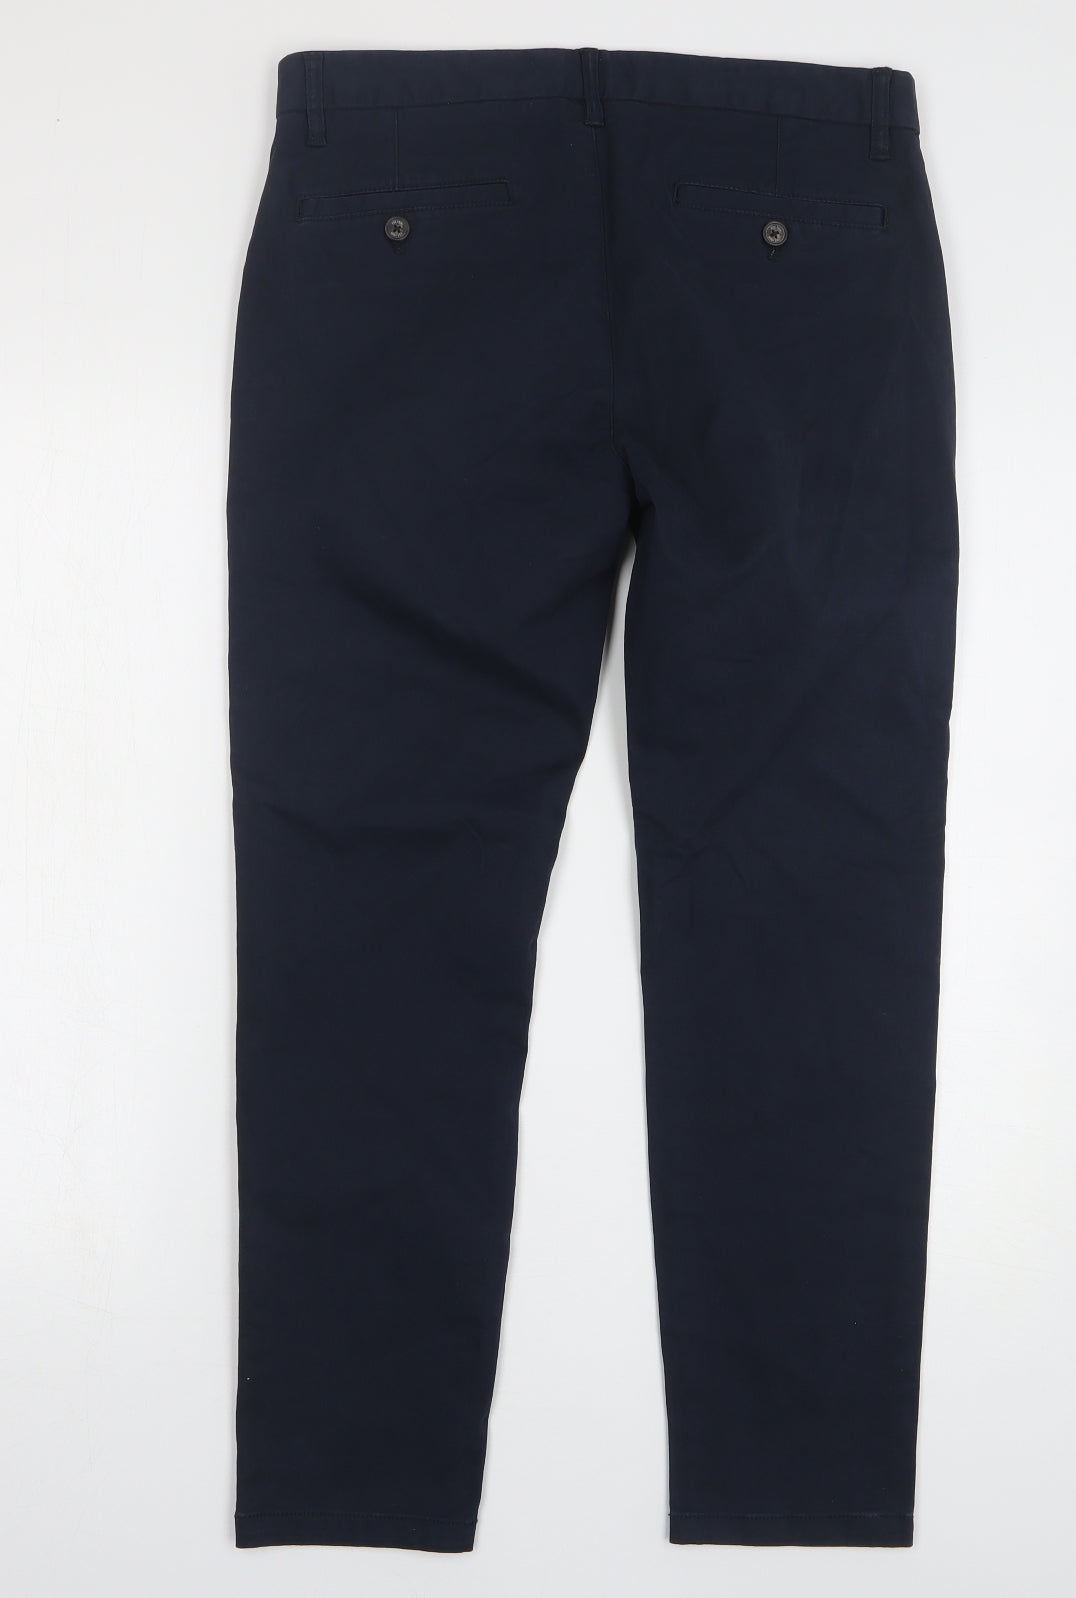 Burton Mens Blue Cotton Chino Trousers Size 32 L28 in Regular Zip